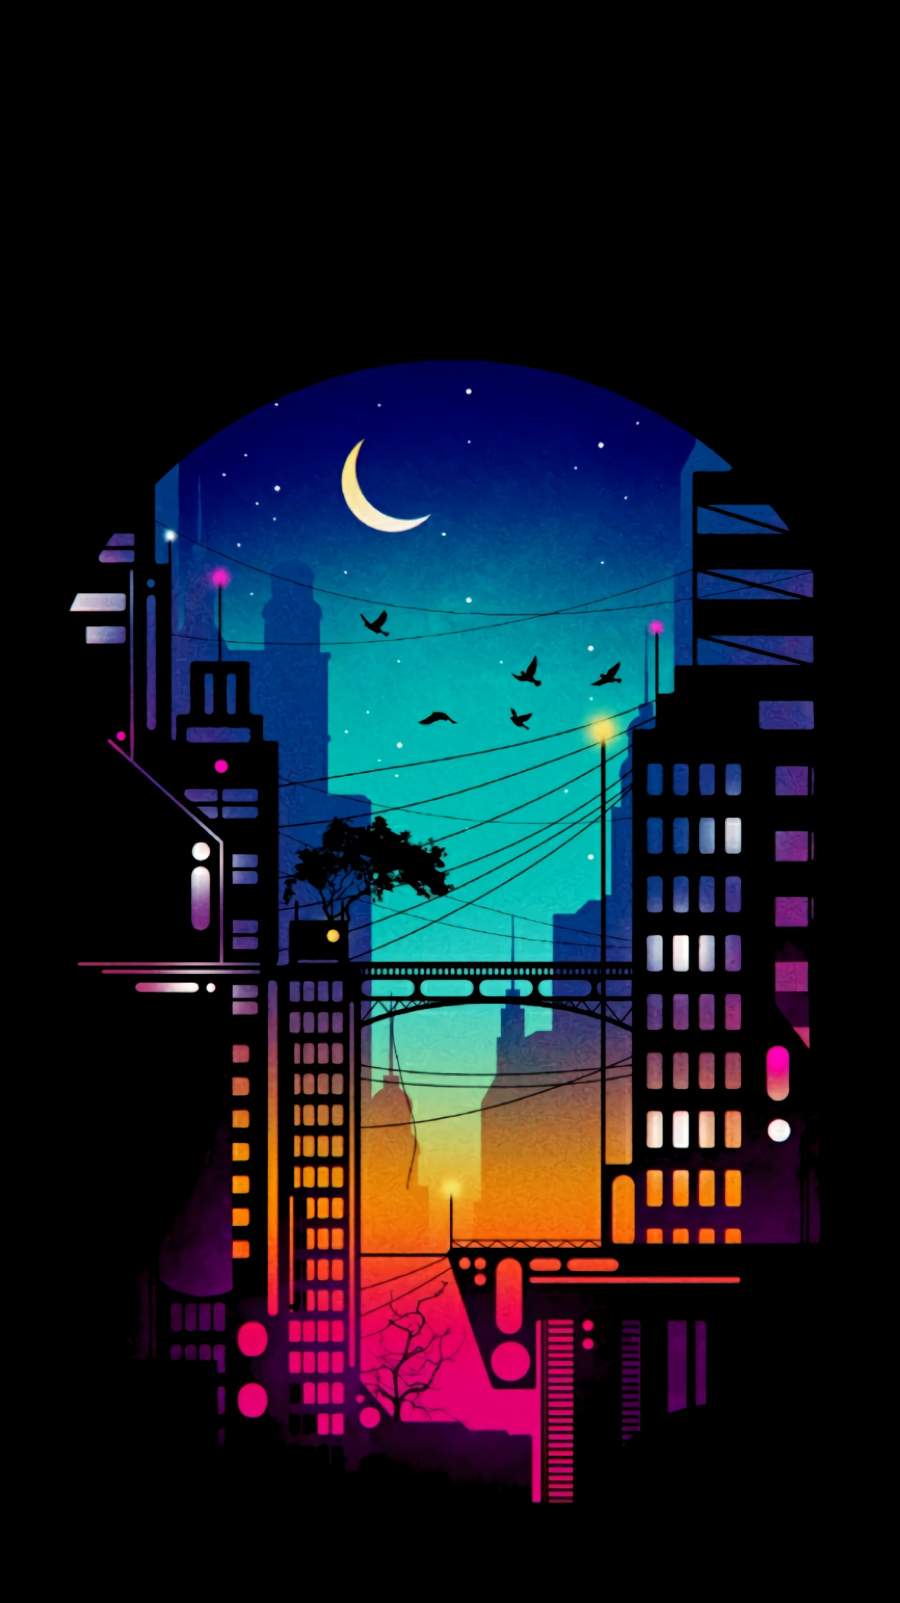 City at night iphone wallpaper